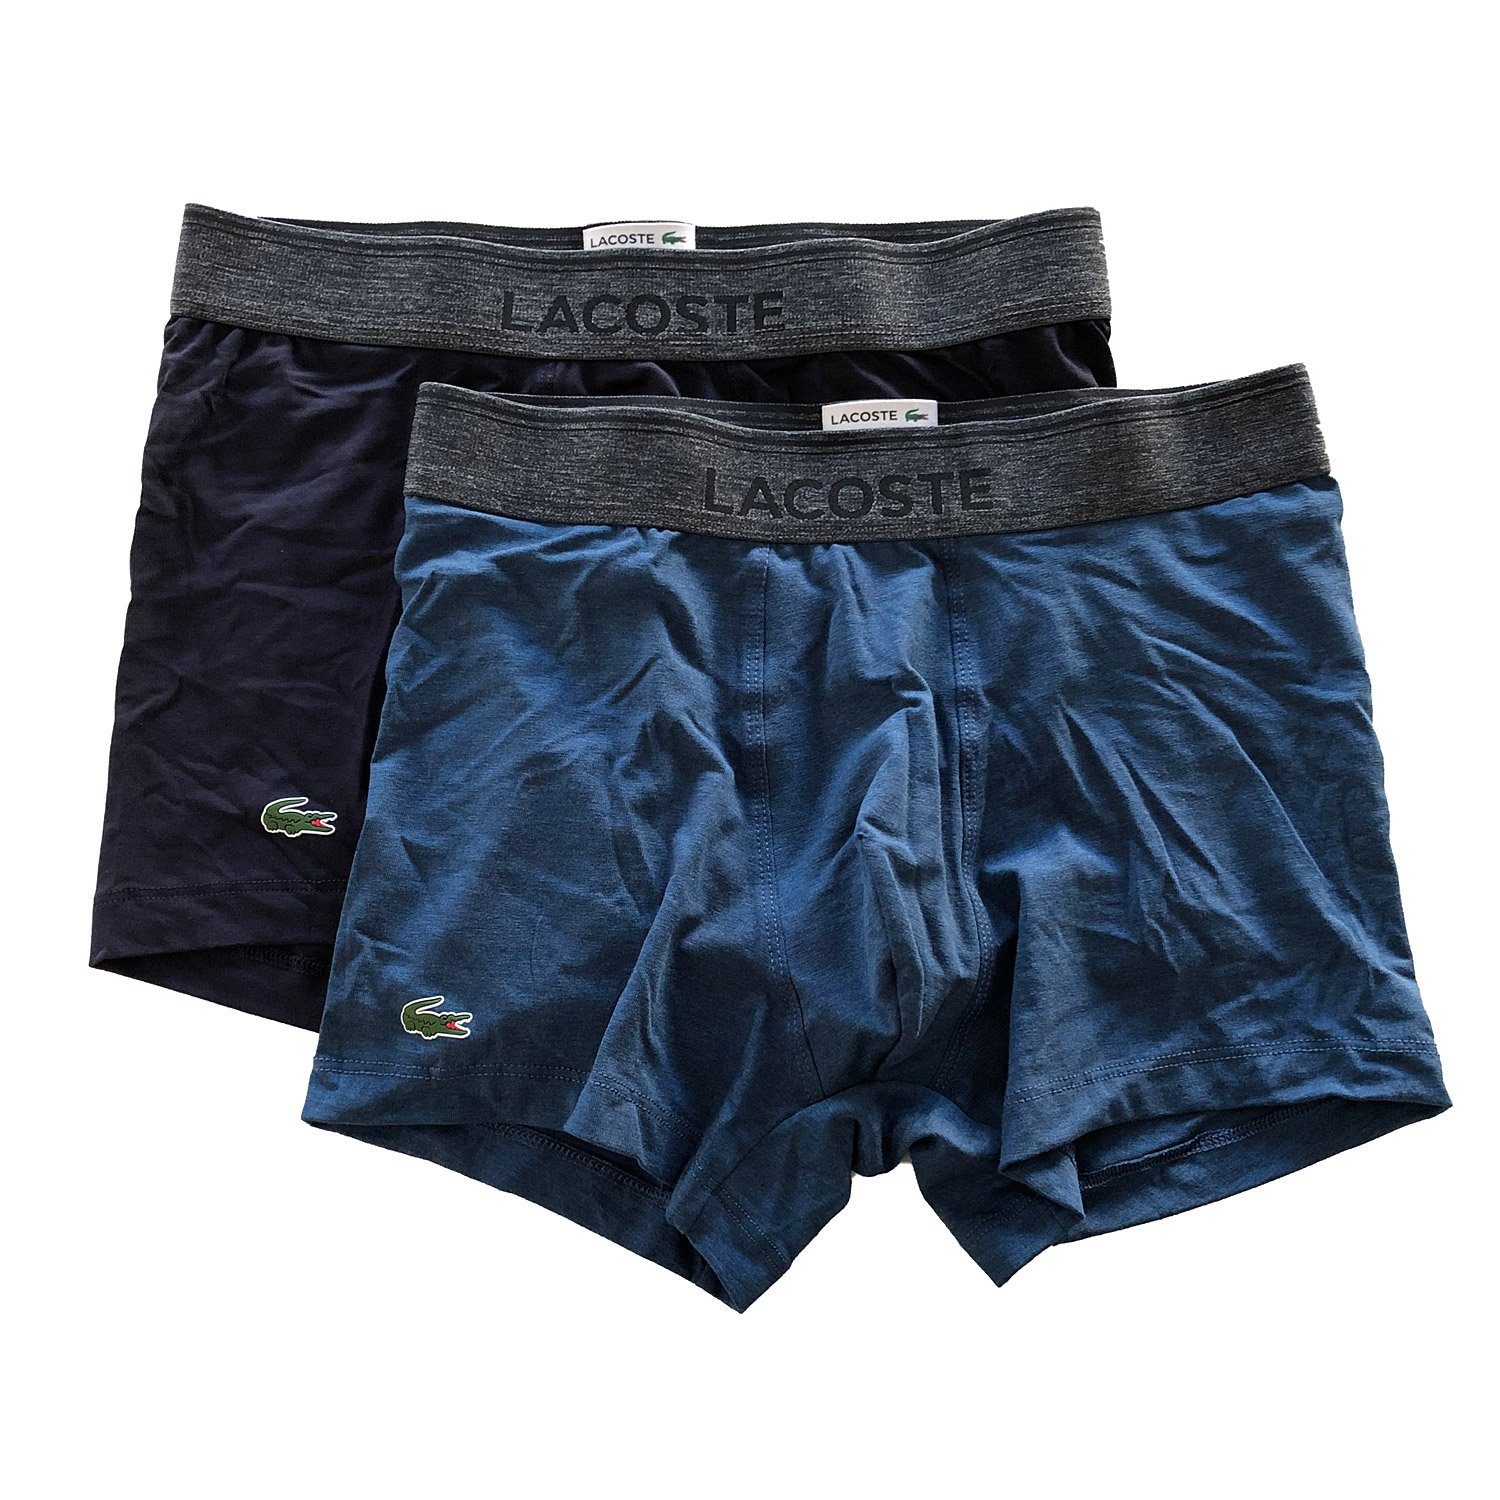 Lacoste Shorts (909) Bein Serie Baumwolle Unterhosen Trunk (Doppelpack, 2-St., Modal im kurzes 2er-Pack) Modal Cotton dunkelblau-dunkelrot Doppelpack